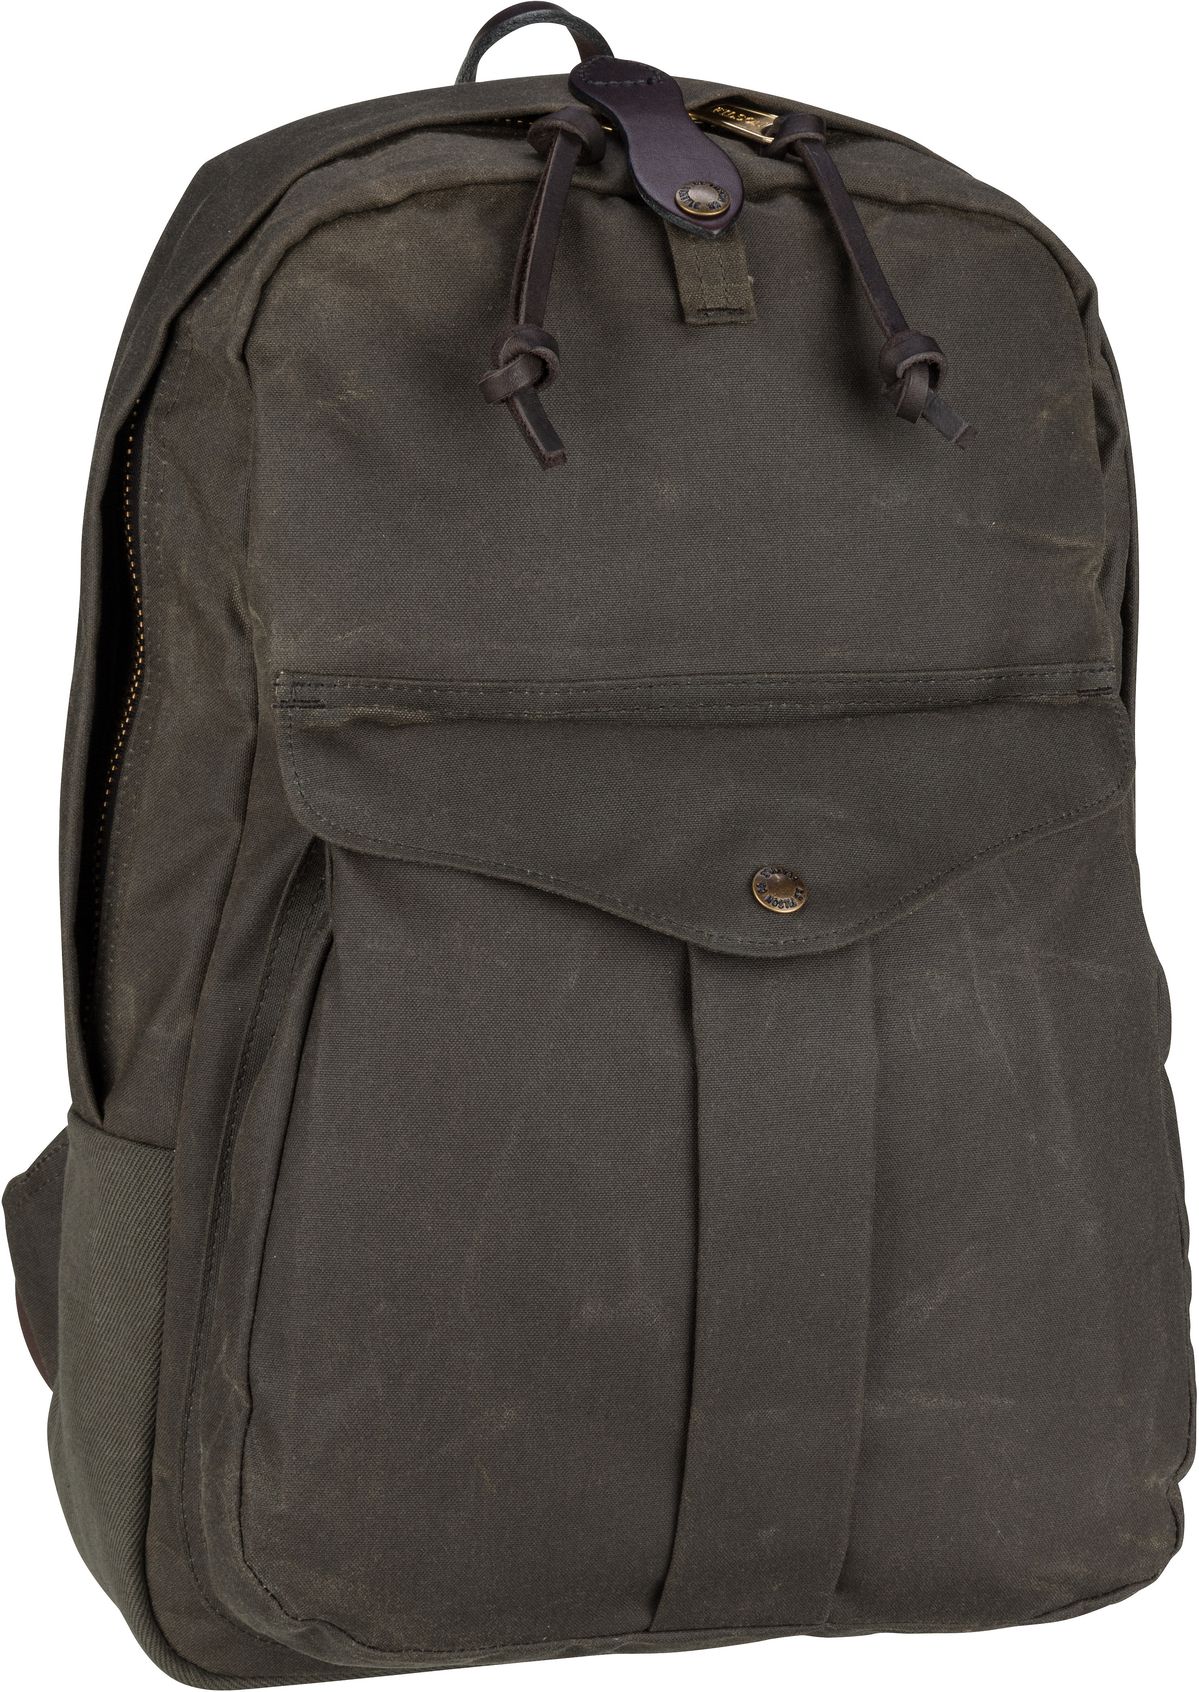 Filson Journeyman Backpack  in Oliv (23 Liter), Rucksack / Backpack von Filson